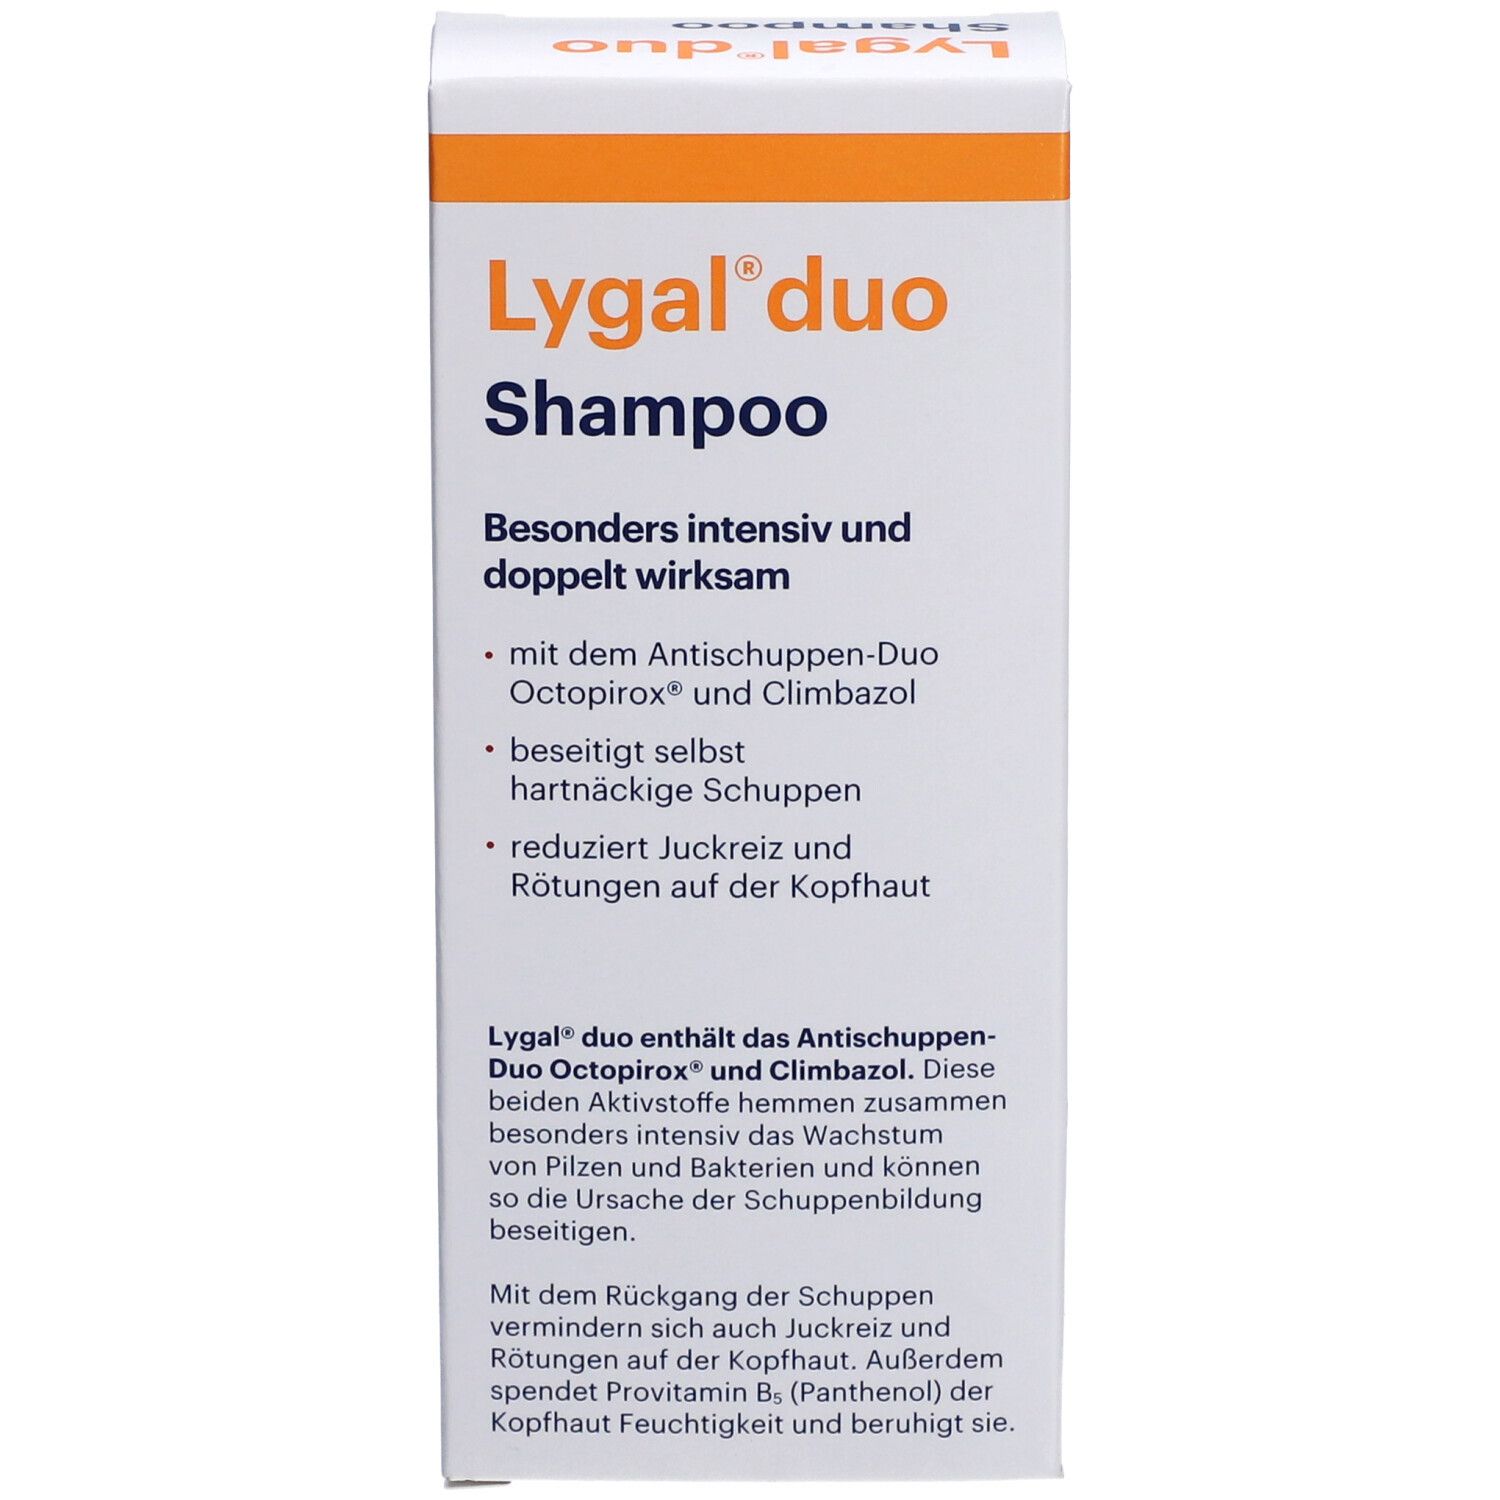 Lygal® duo SHAMPOO